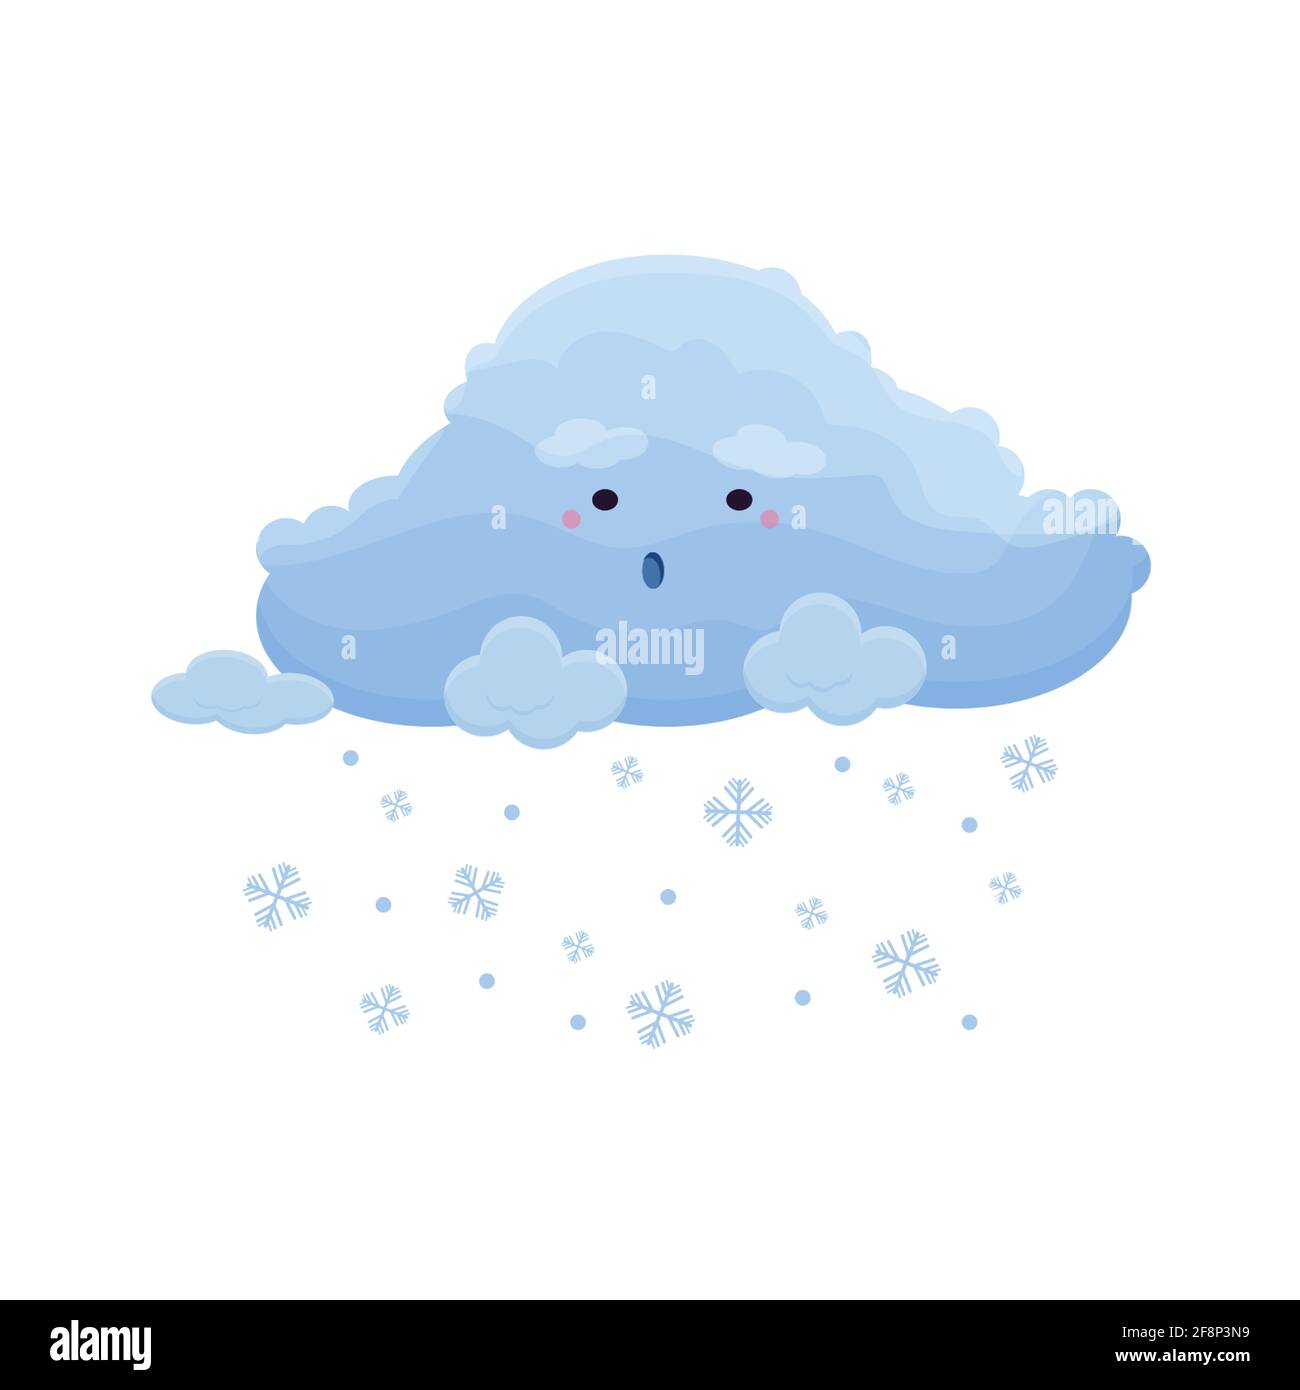 Cute weather icons set in cartoon flat style isolated on white background. Vector illustration of sun, rain, storm, snow, wind, moon, star, rainbow. Funny characters. Vector illustration Stock Vector